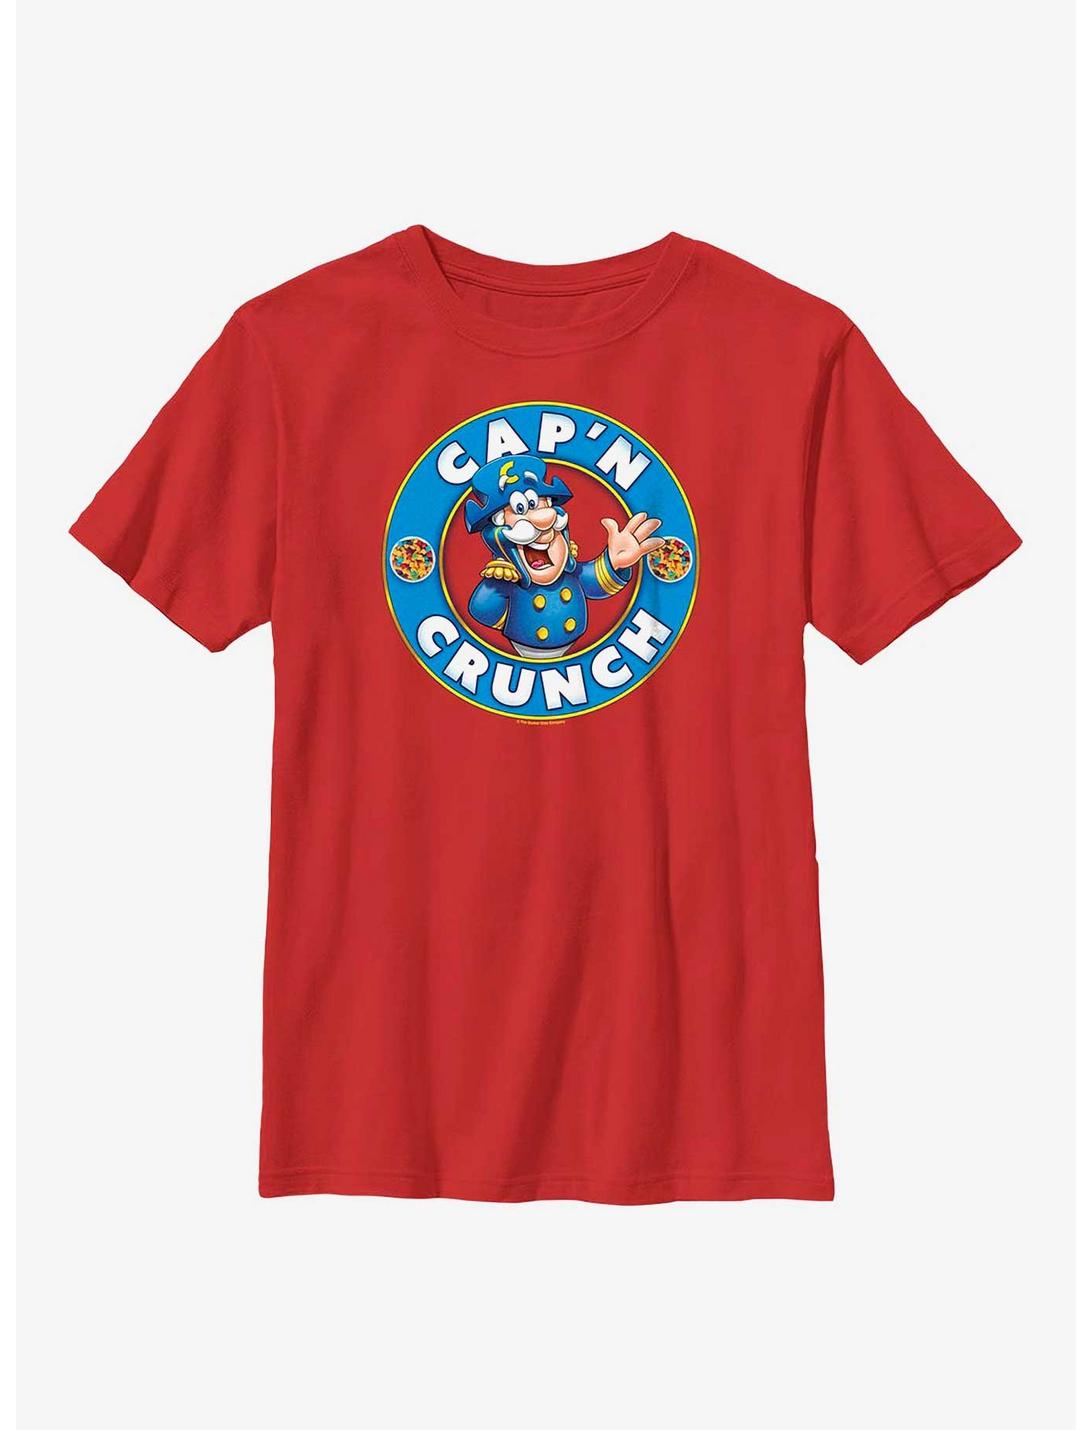 Cap'n Crunch Cap Logo Youth T-Shirt, RED, hi-res